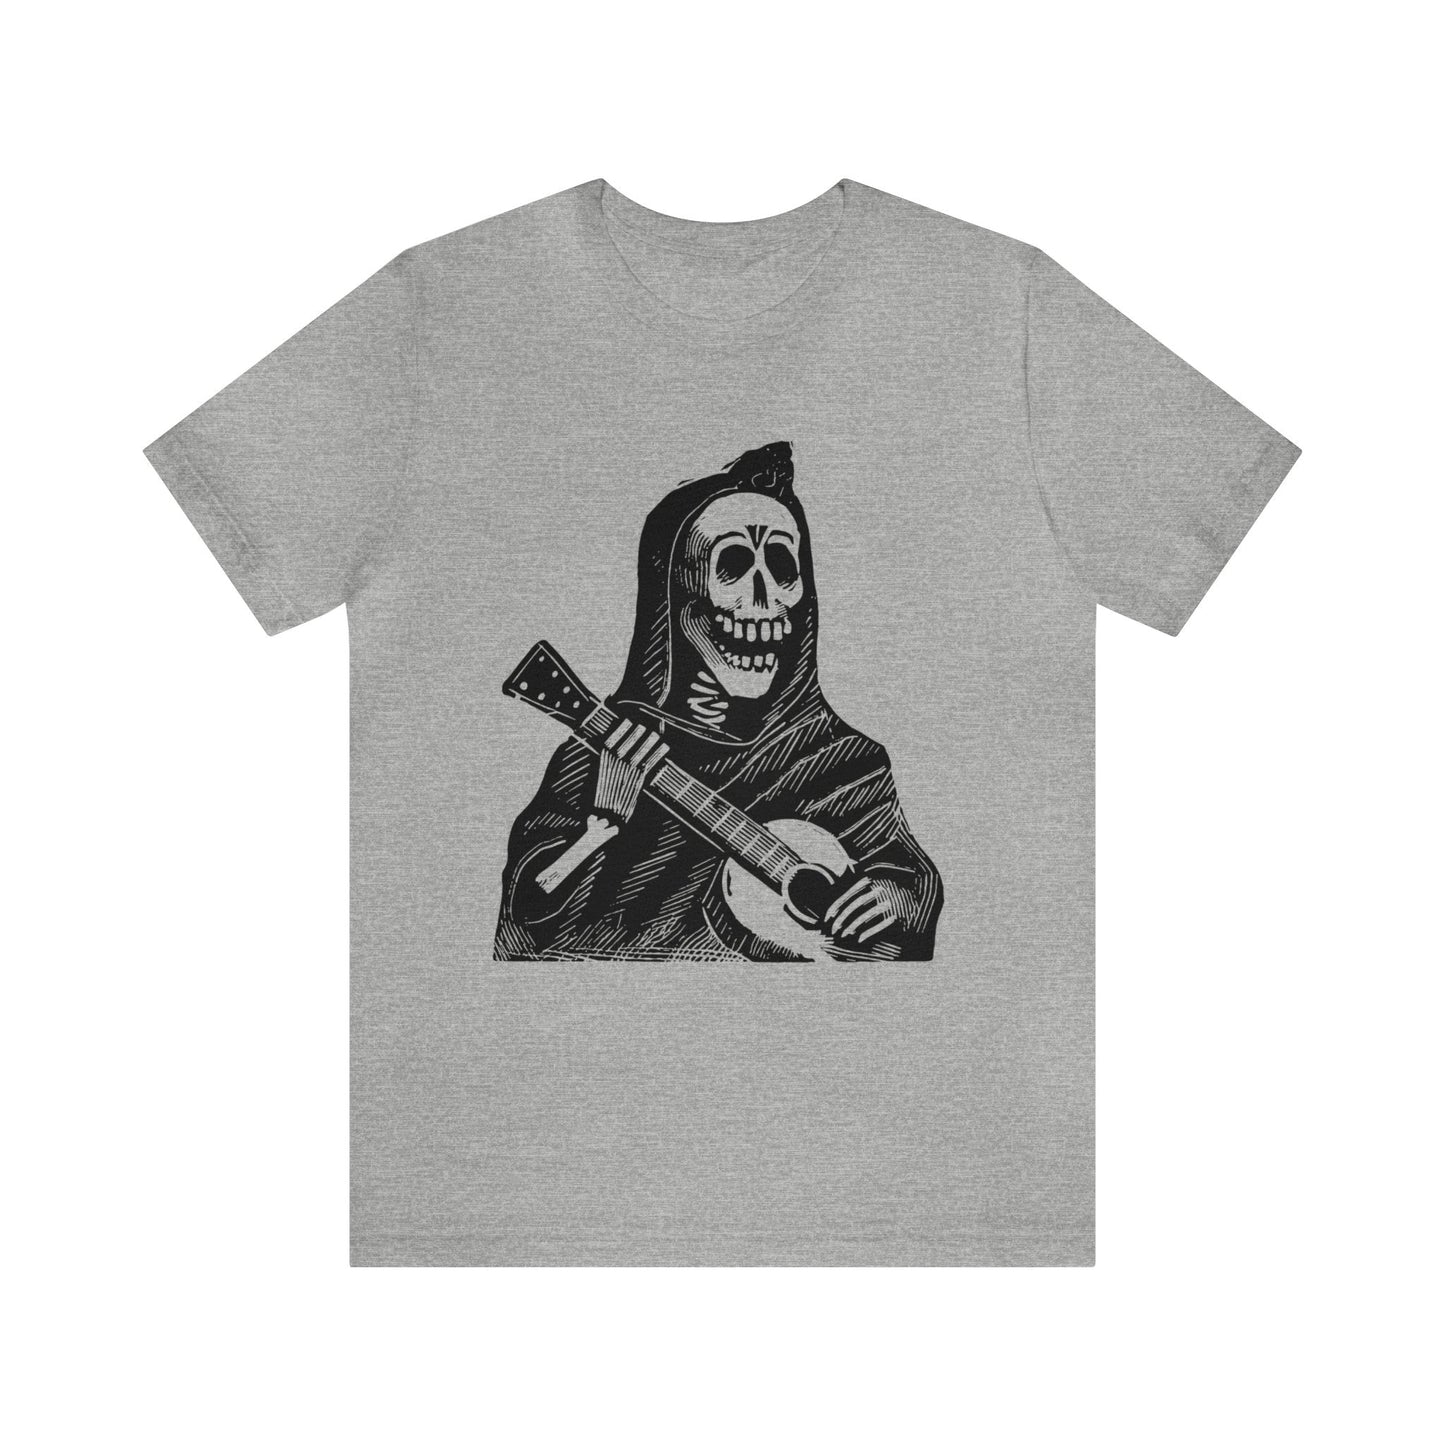 Skeleton Playing The Guitar - José Guadalupe Posada - Black Mass Apparel - T-Shirt